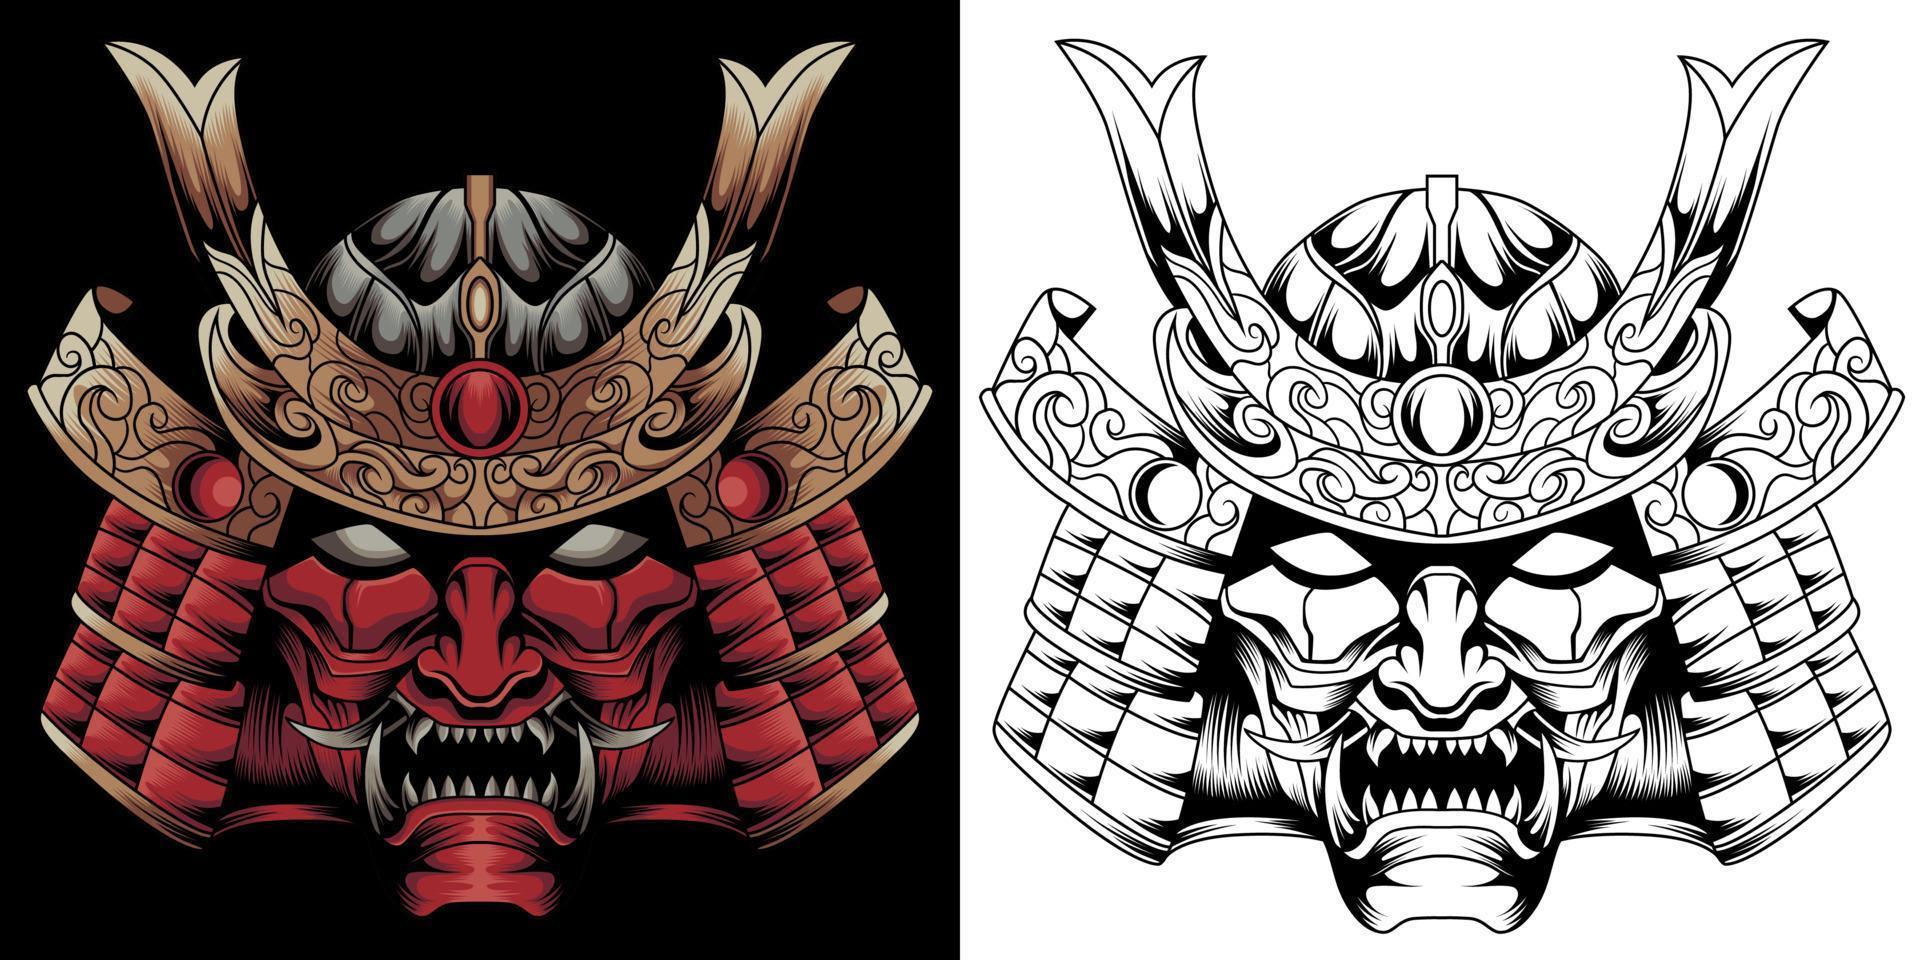 samuraj krigare mask. traditionell rustning av japansk krigare. vektor illustration, skjorta grafisk.